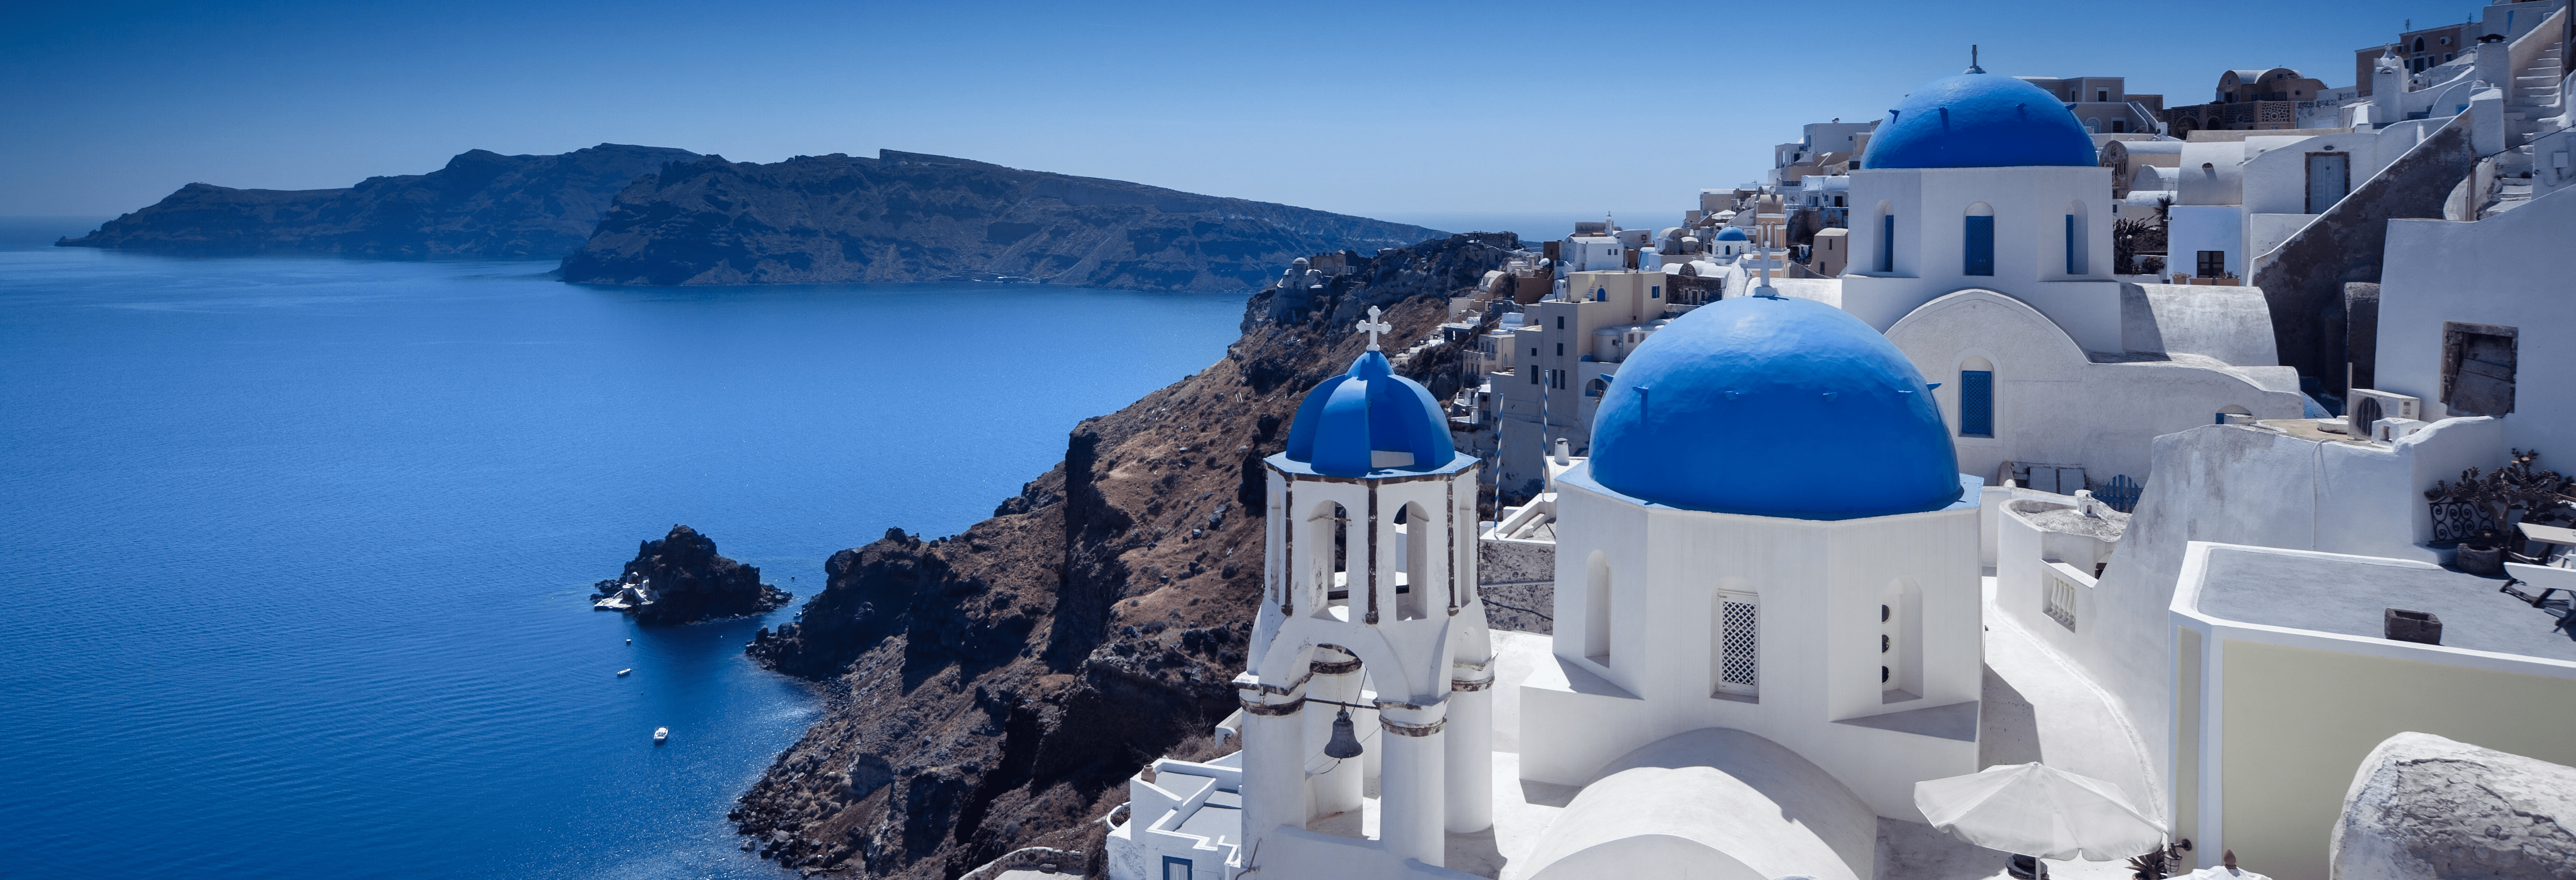 landscape of Greece vacation resort